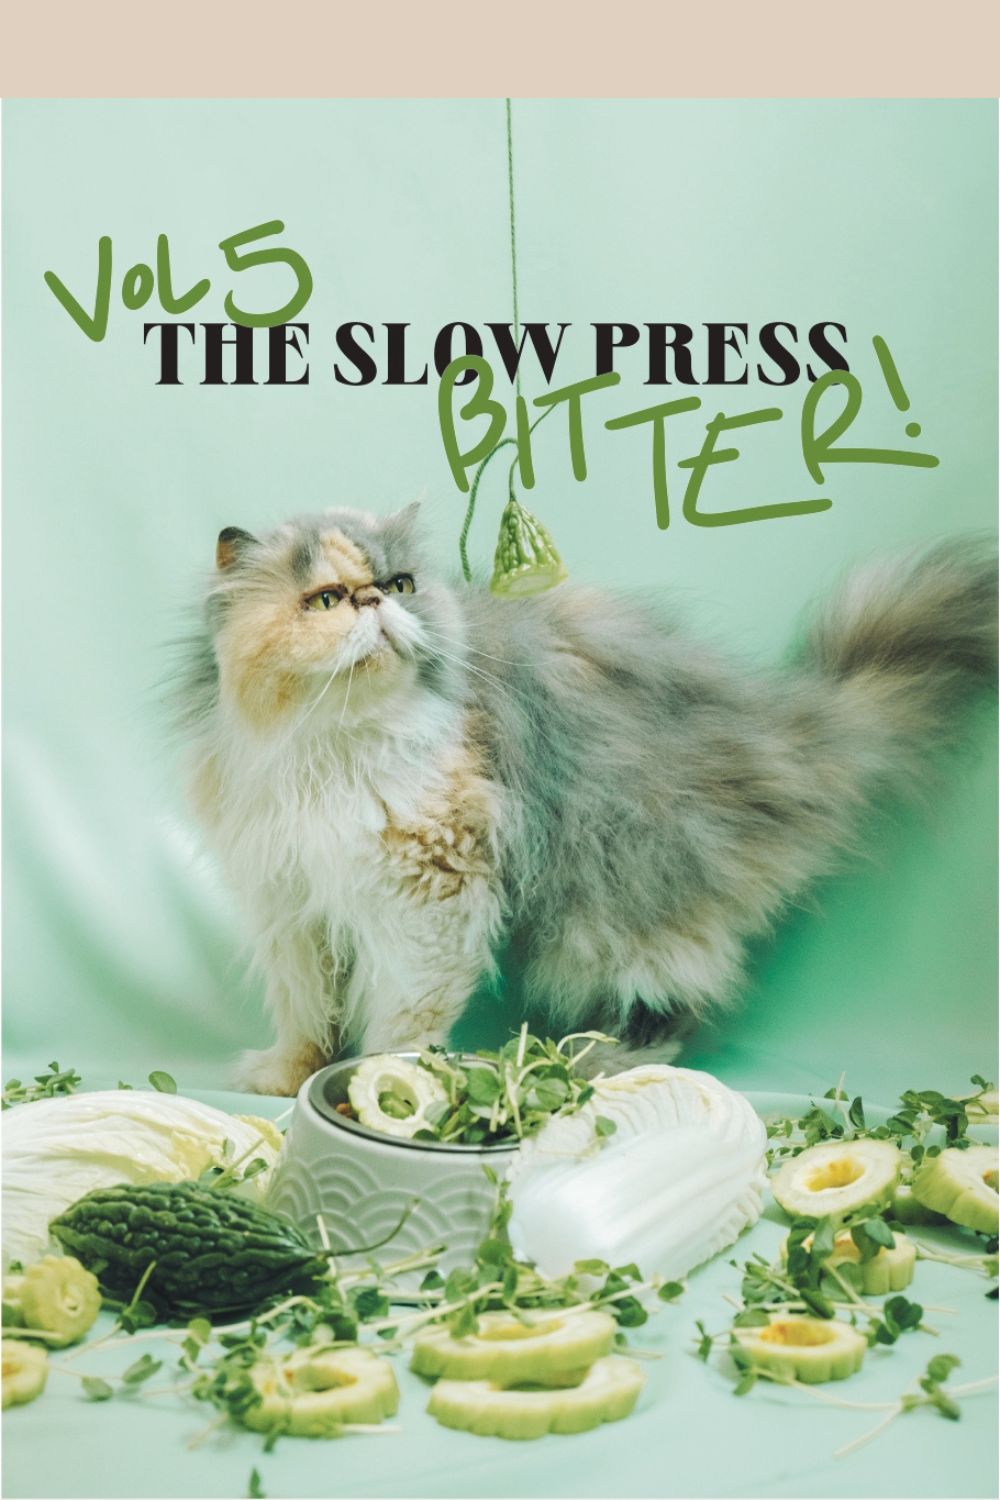 The Slow Press Vol. 5 cover